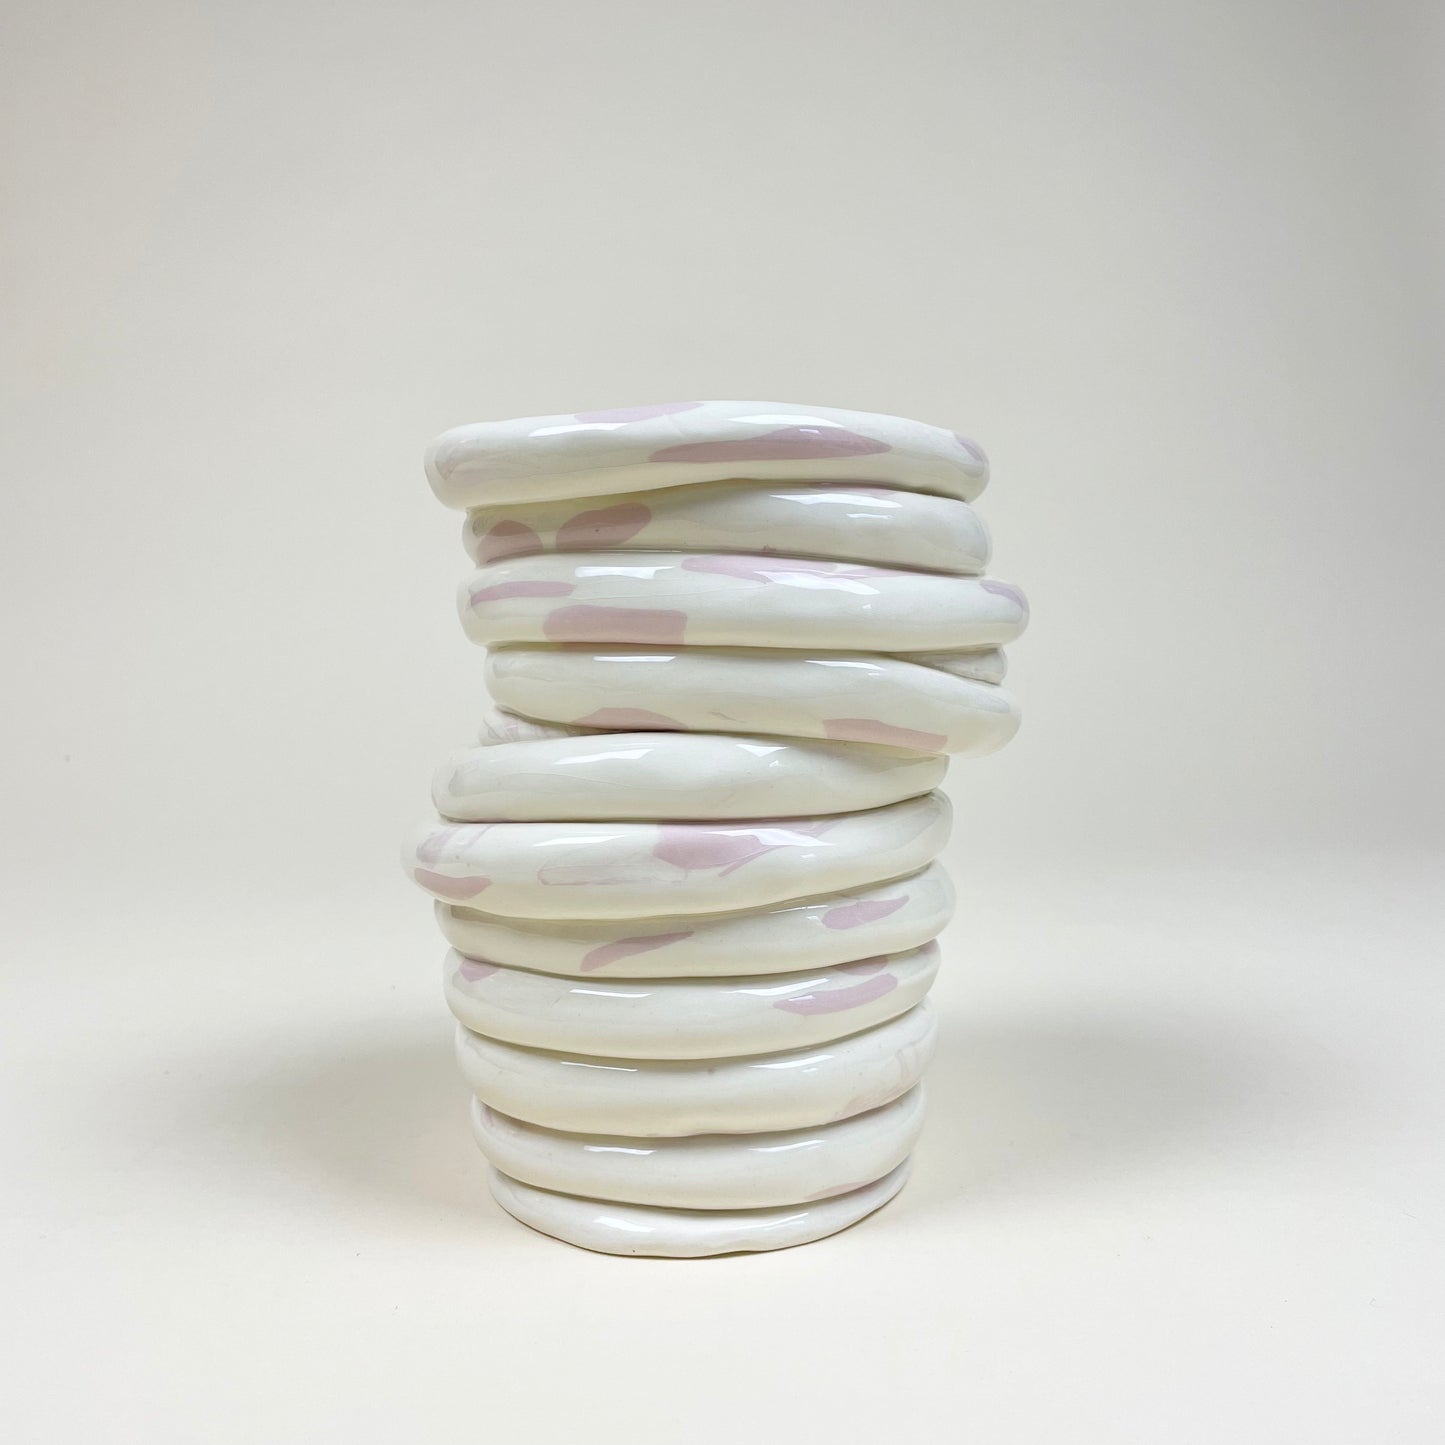 Ceramic vase by Joanna Gunther